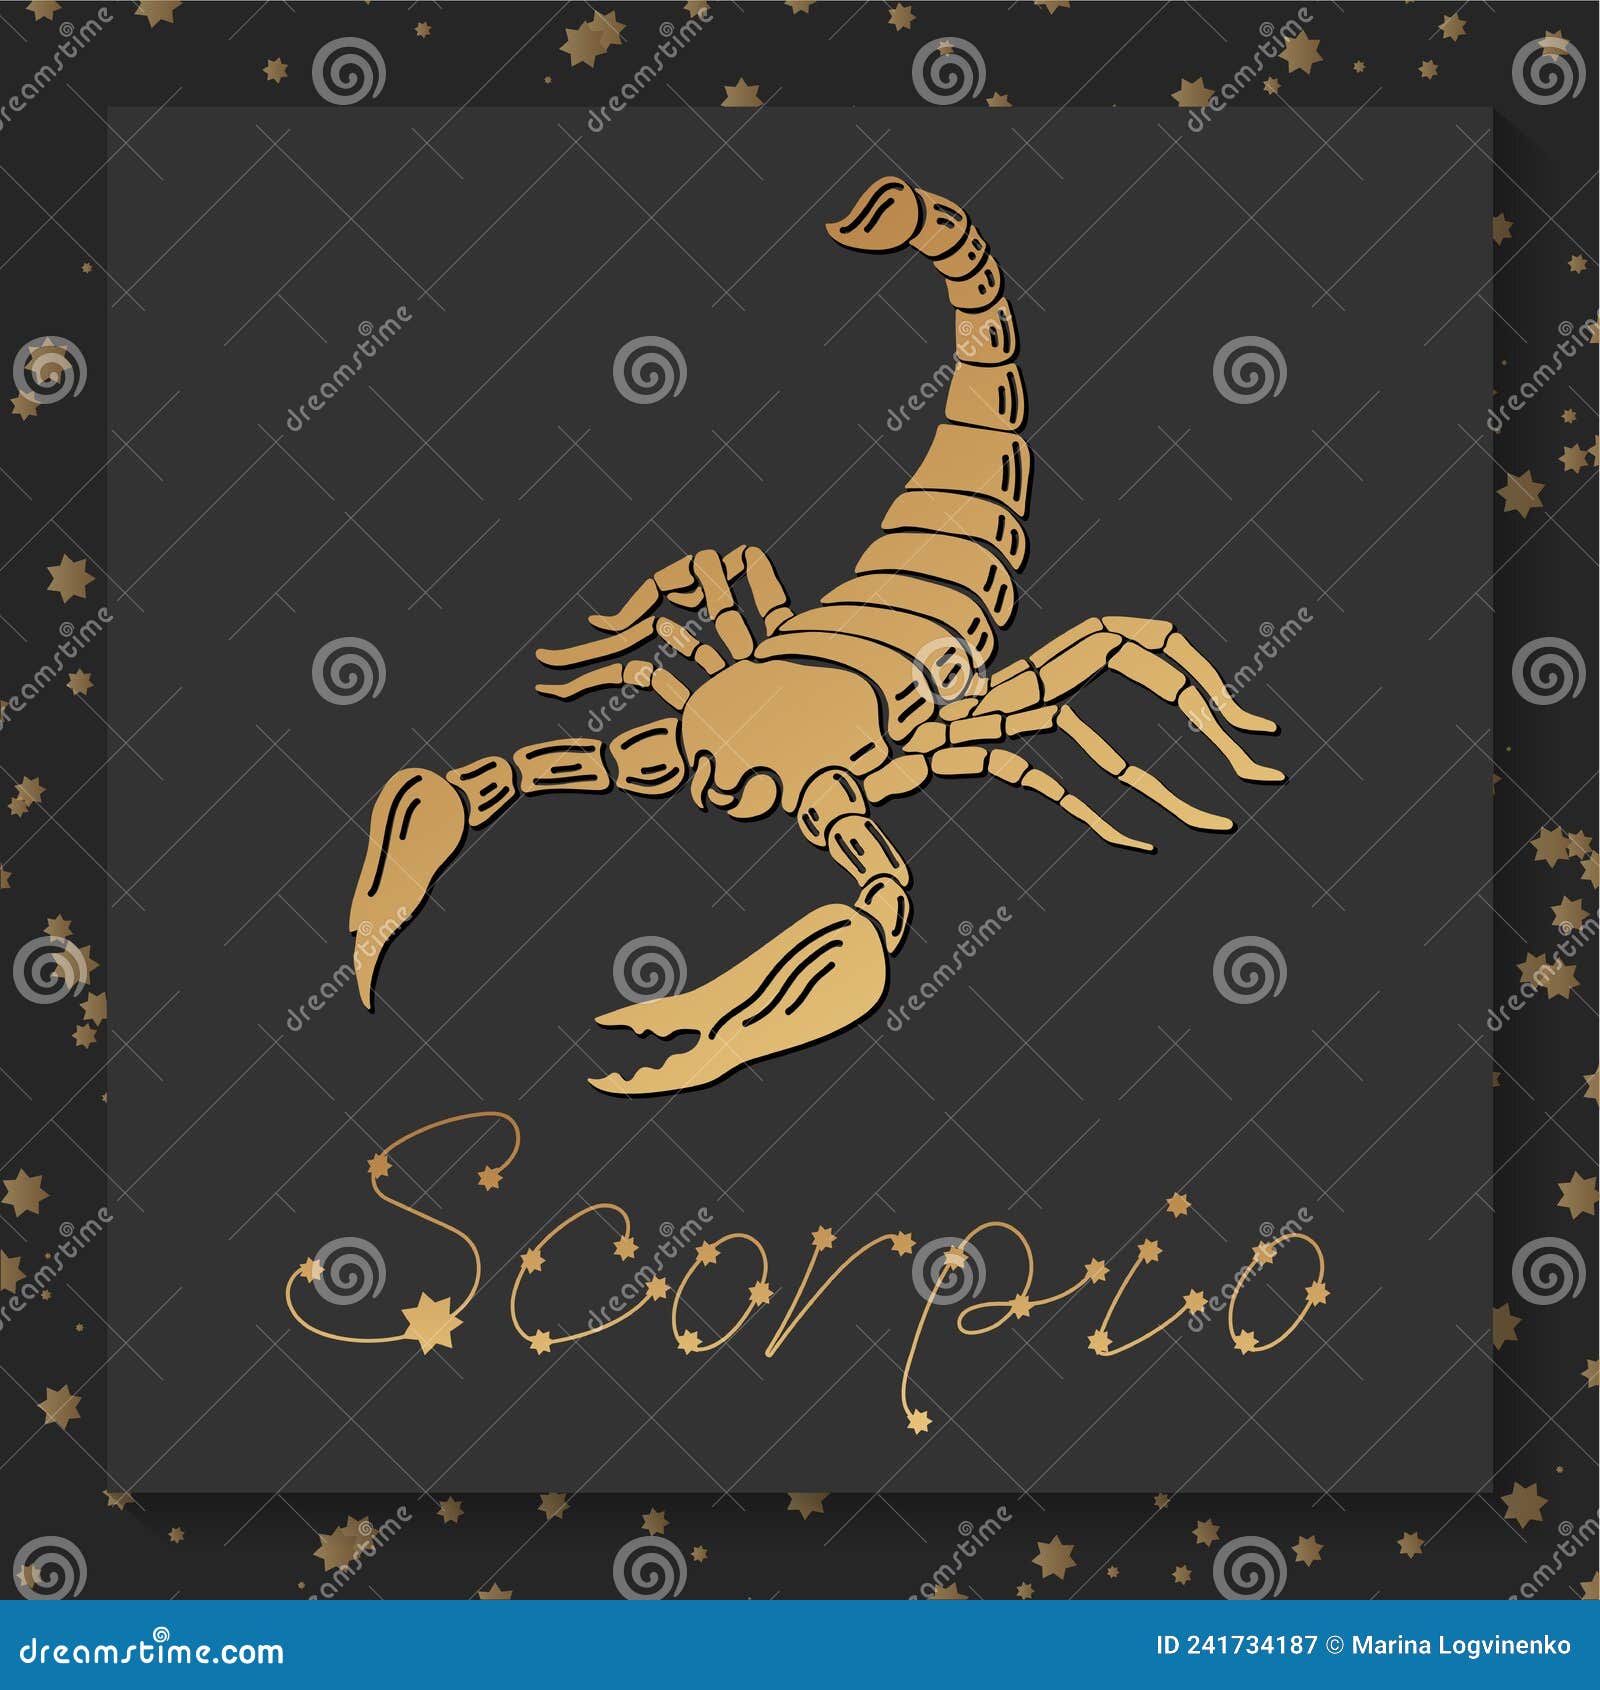 Gold Zodiac Scorpio Horoscope Sign on Dark Square Background Stock ...